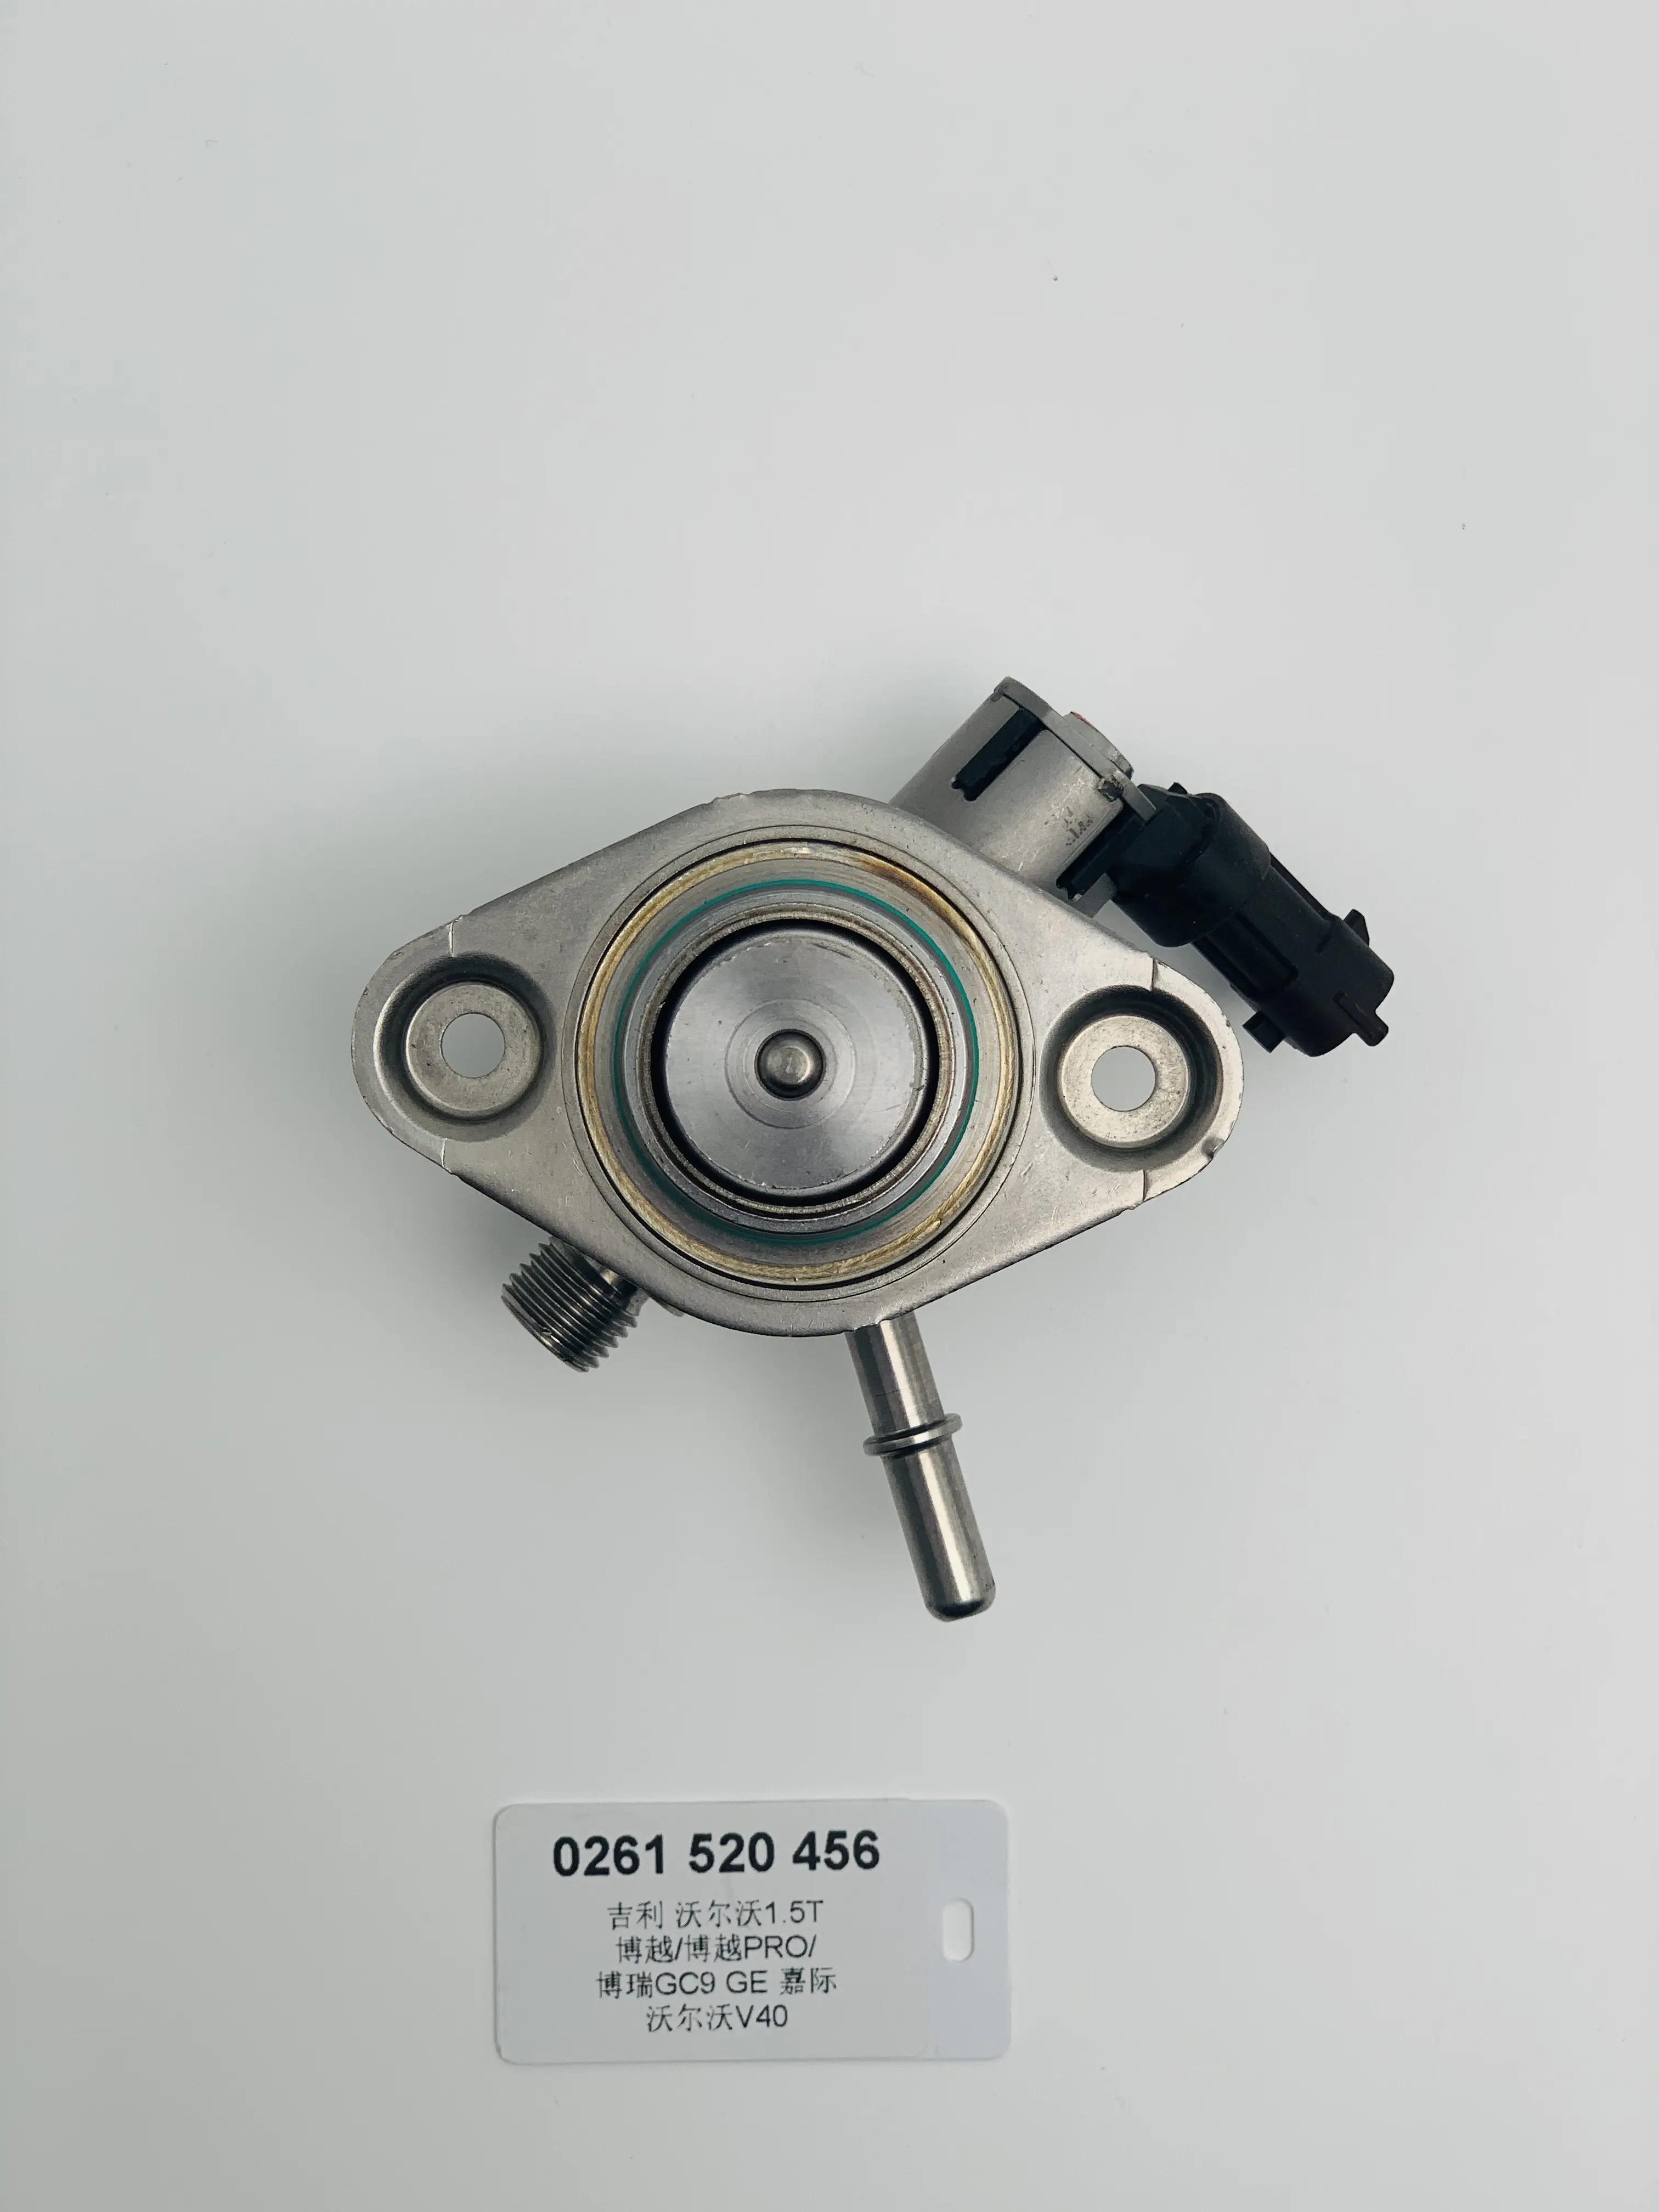 0261520456 High Pressure pump for Geely Boyue Boyue pro Borui gc9 GE Jiaji Volvo v40 1.5T